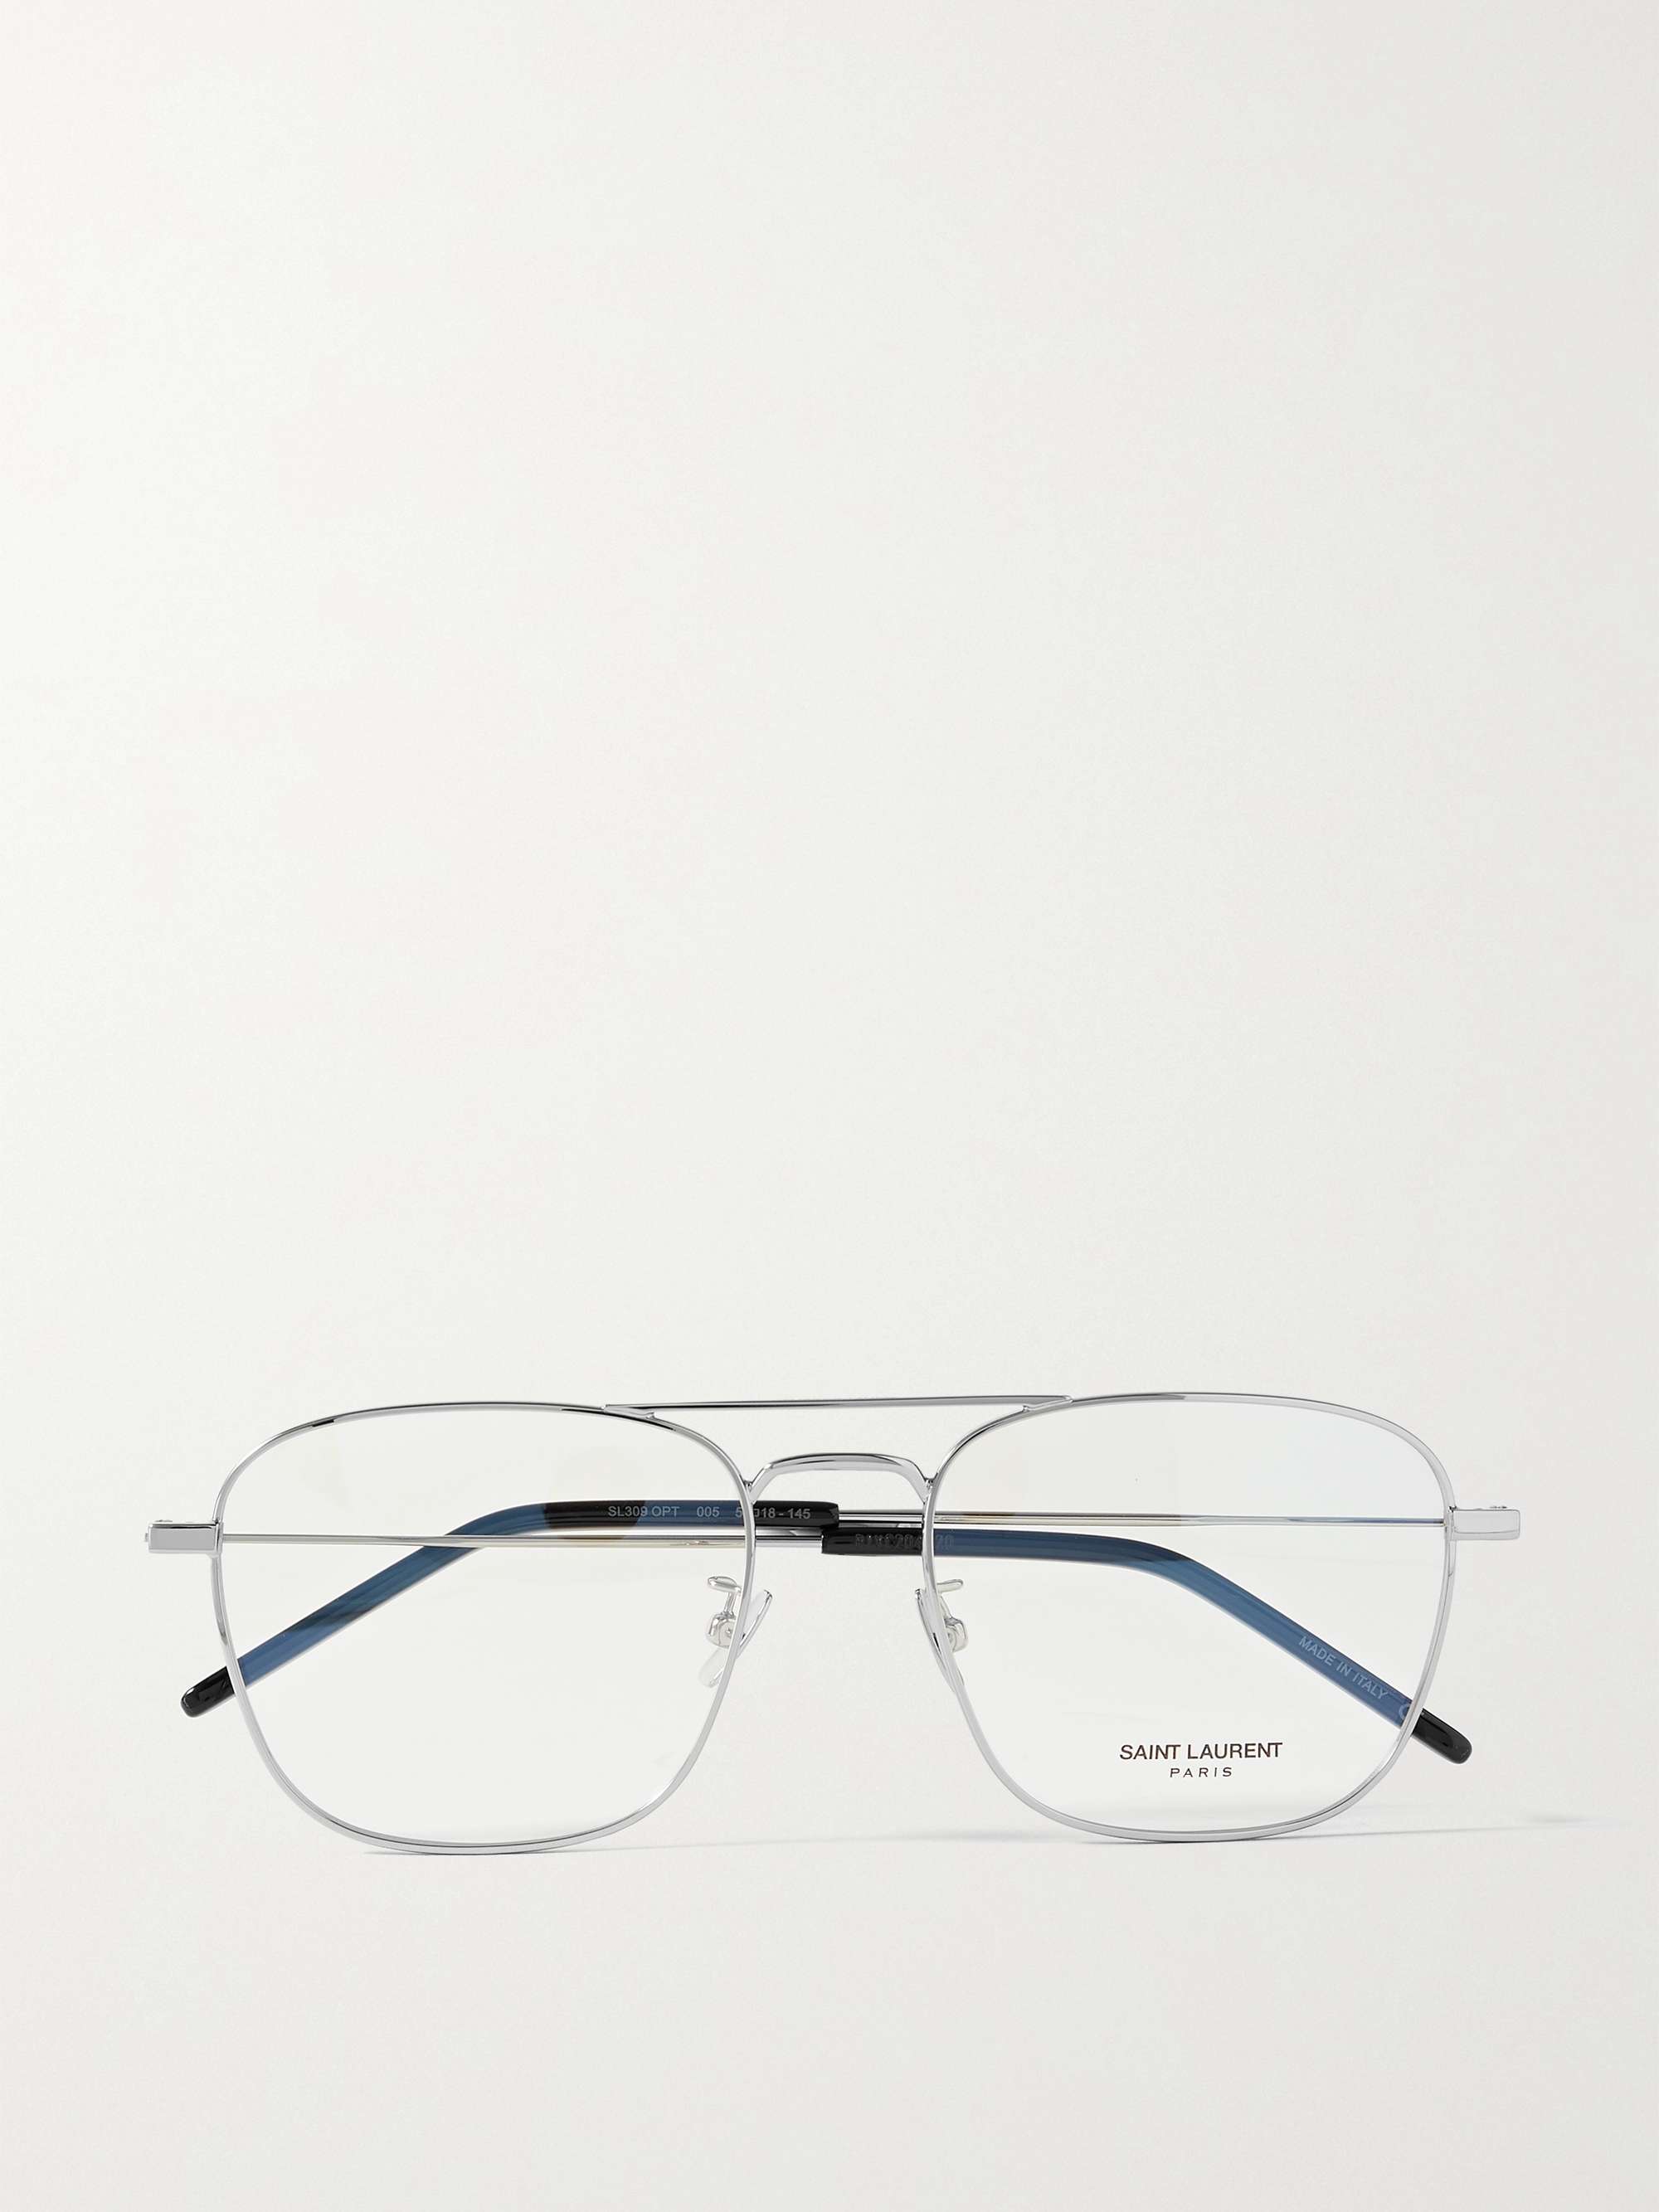 SAINT LAURENT EYEWEAR Aviator-Style Silver-Tone Optical Glasses